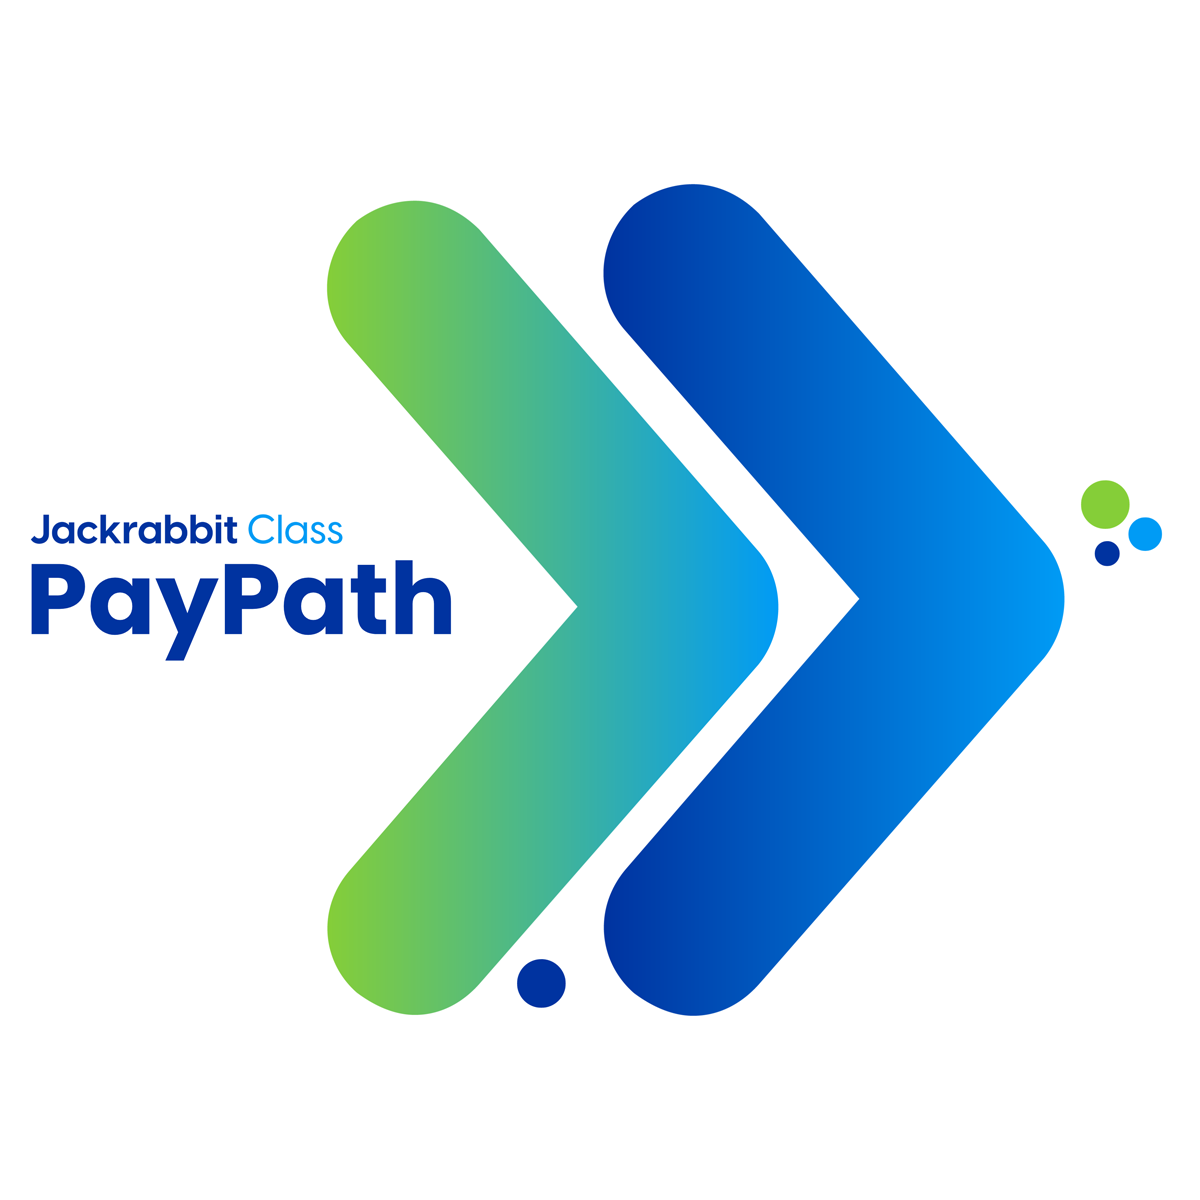 Jackrabbit PayPath with Jackrabbit Class graphic arrows